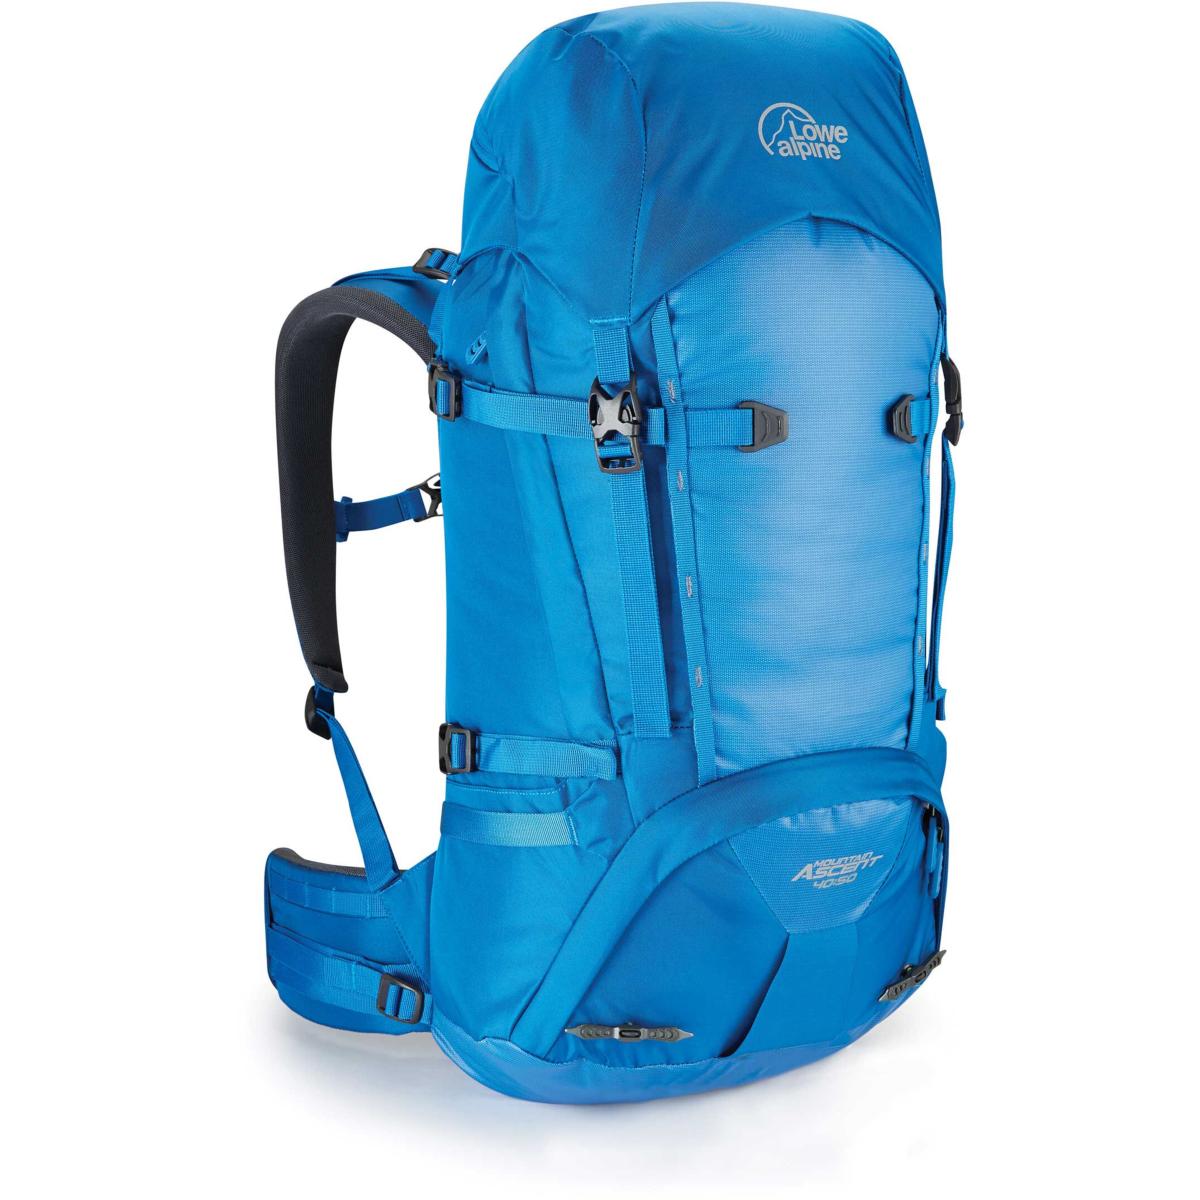 Lowe Alpine 50l Backpack | lupon.gov.ph